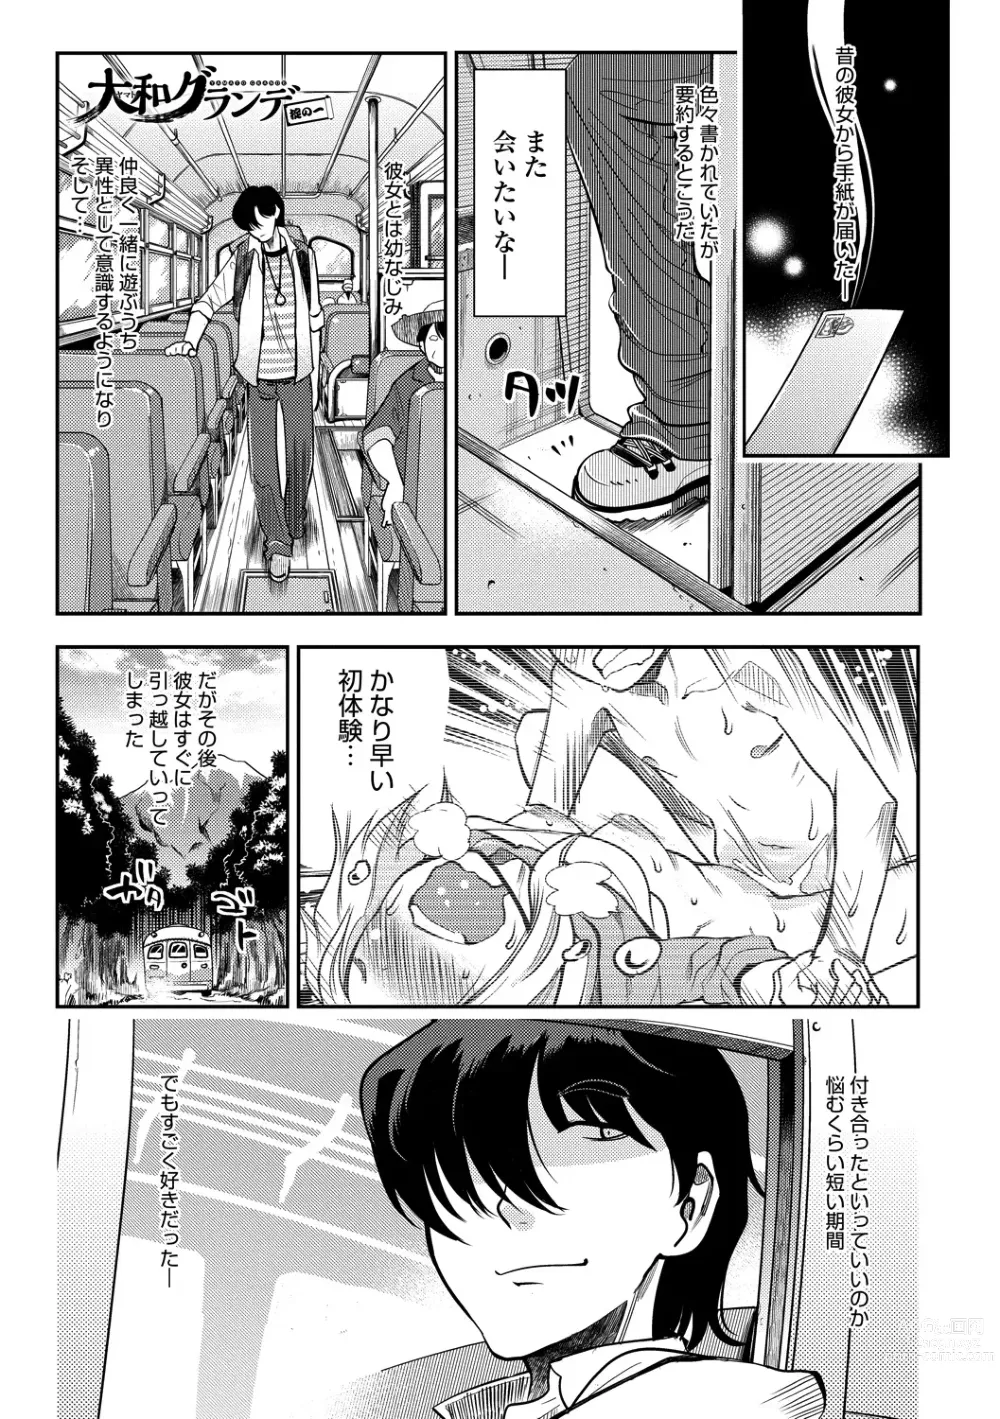 Page 5 of manga Hamekko 3Peace!!!